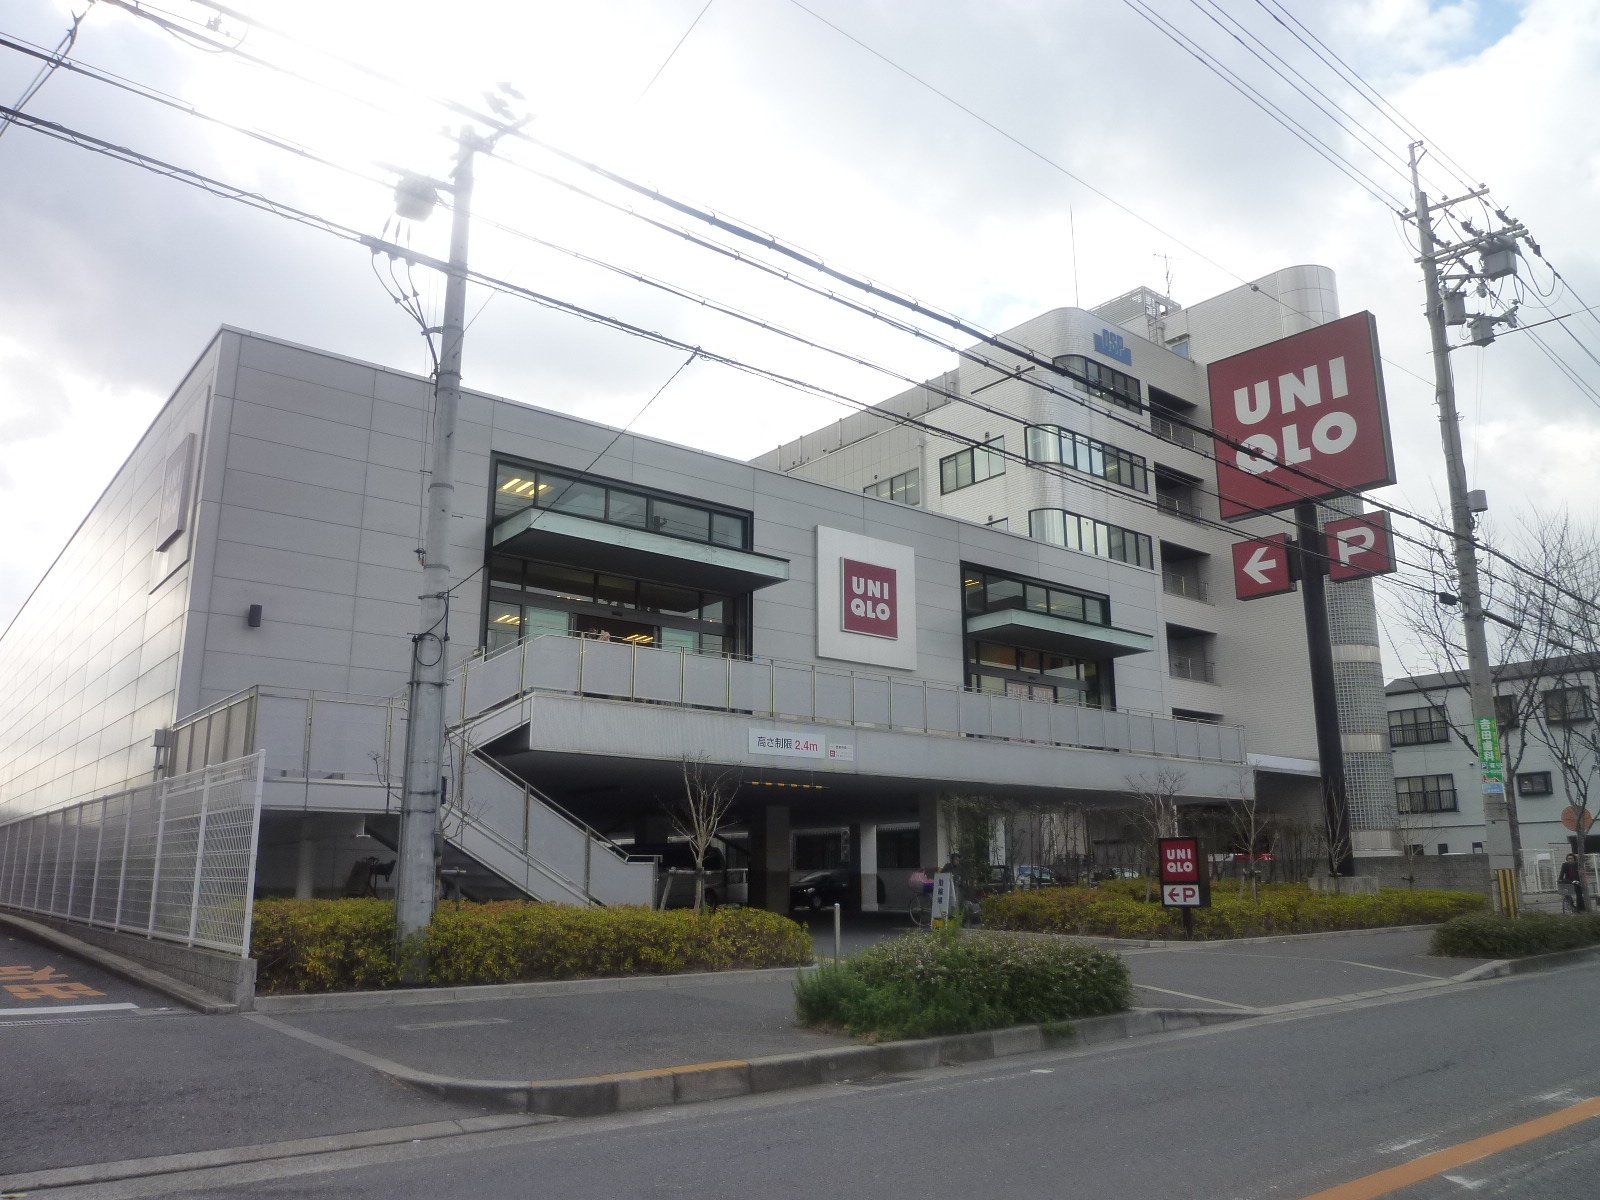 Shopping centre. 689m to UNIQLO Yao Aoyama (shopping center)